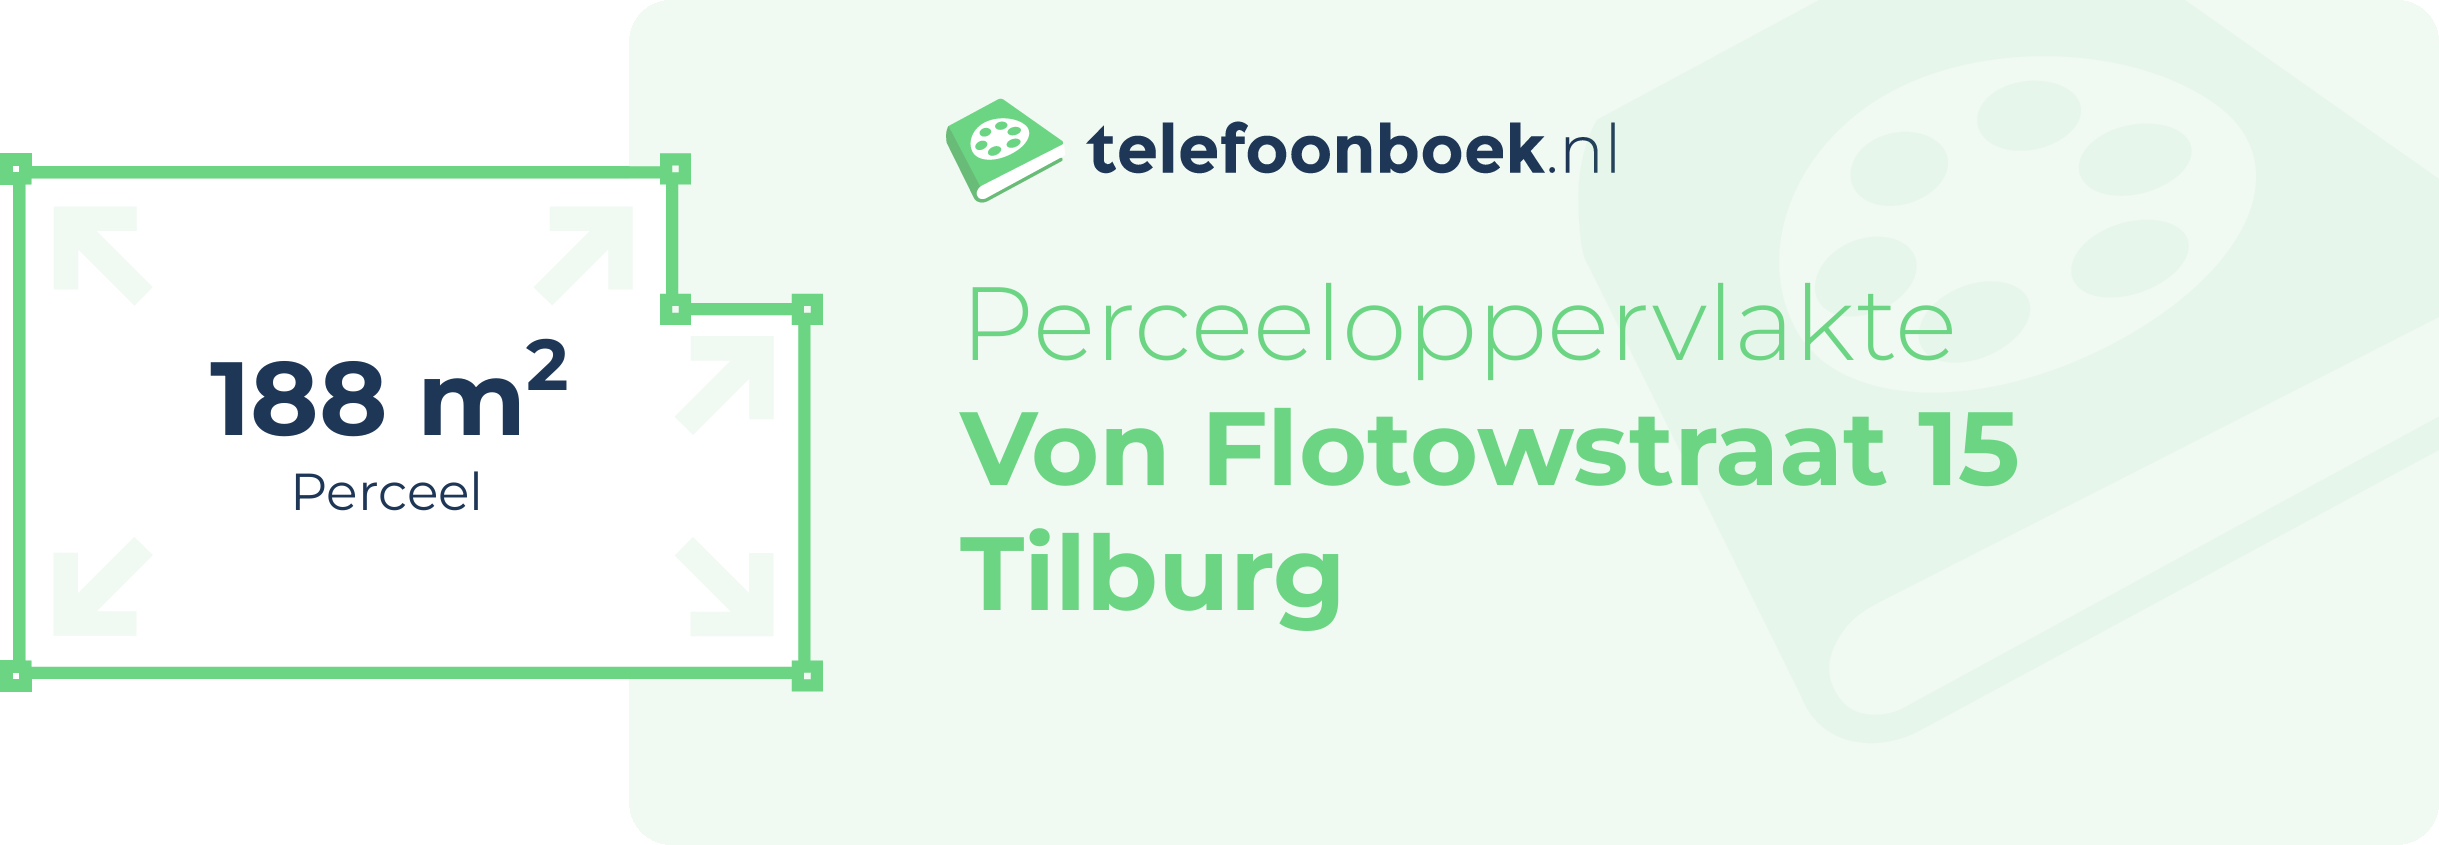 Perceeloppervlakte Von Flotowstraat 15 Tilburg